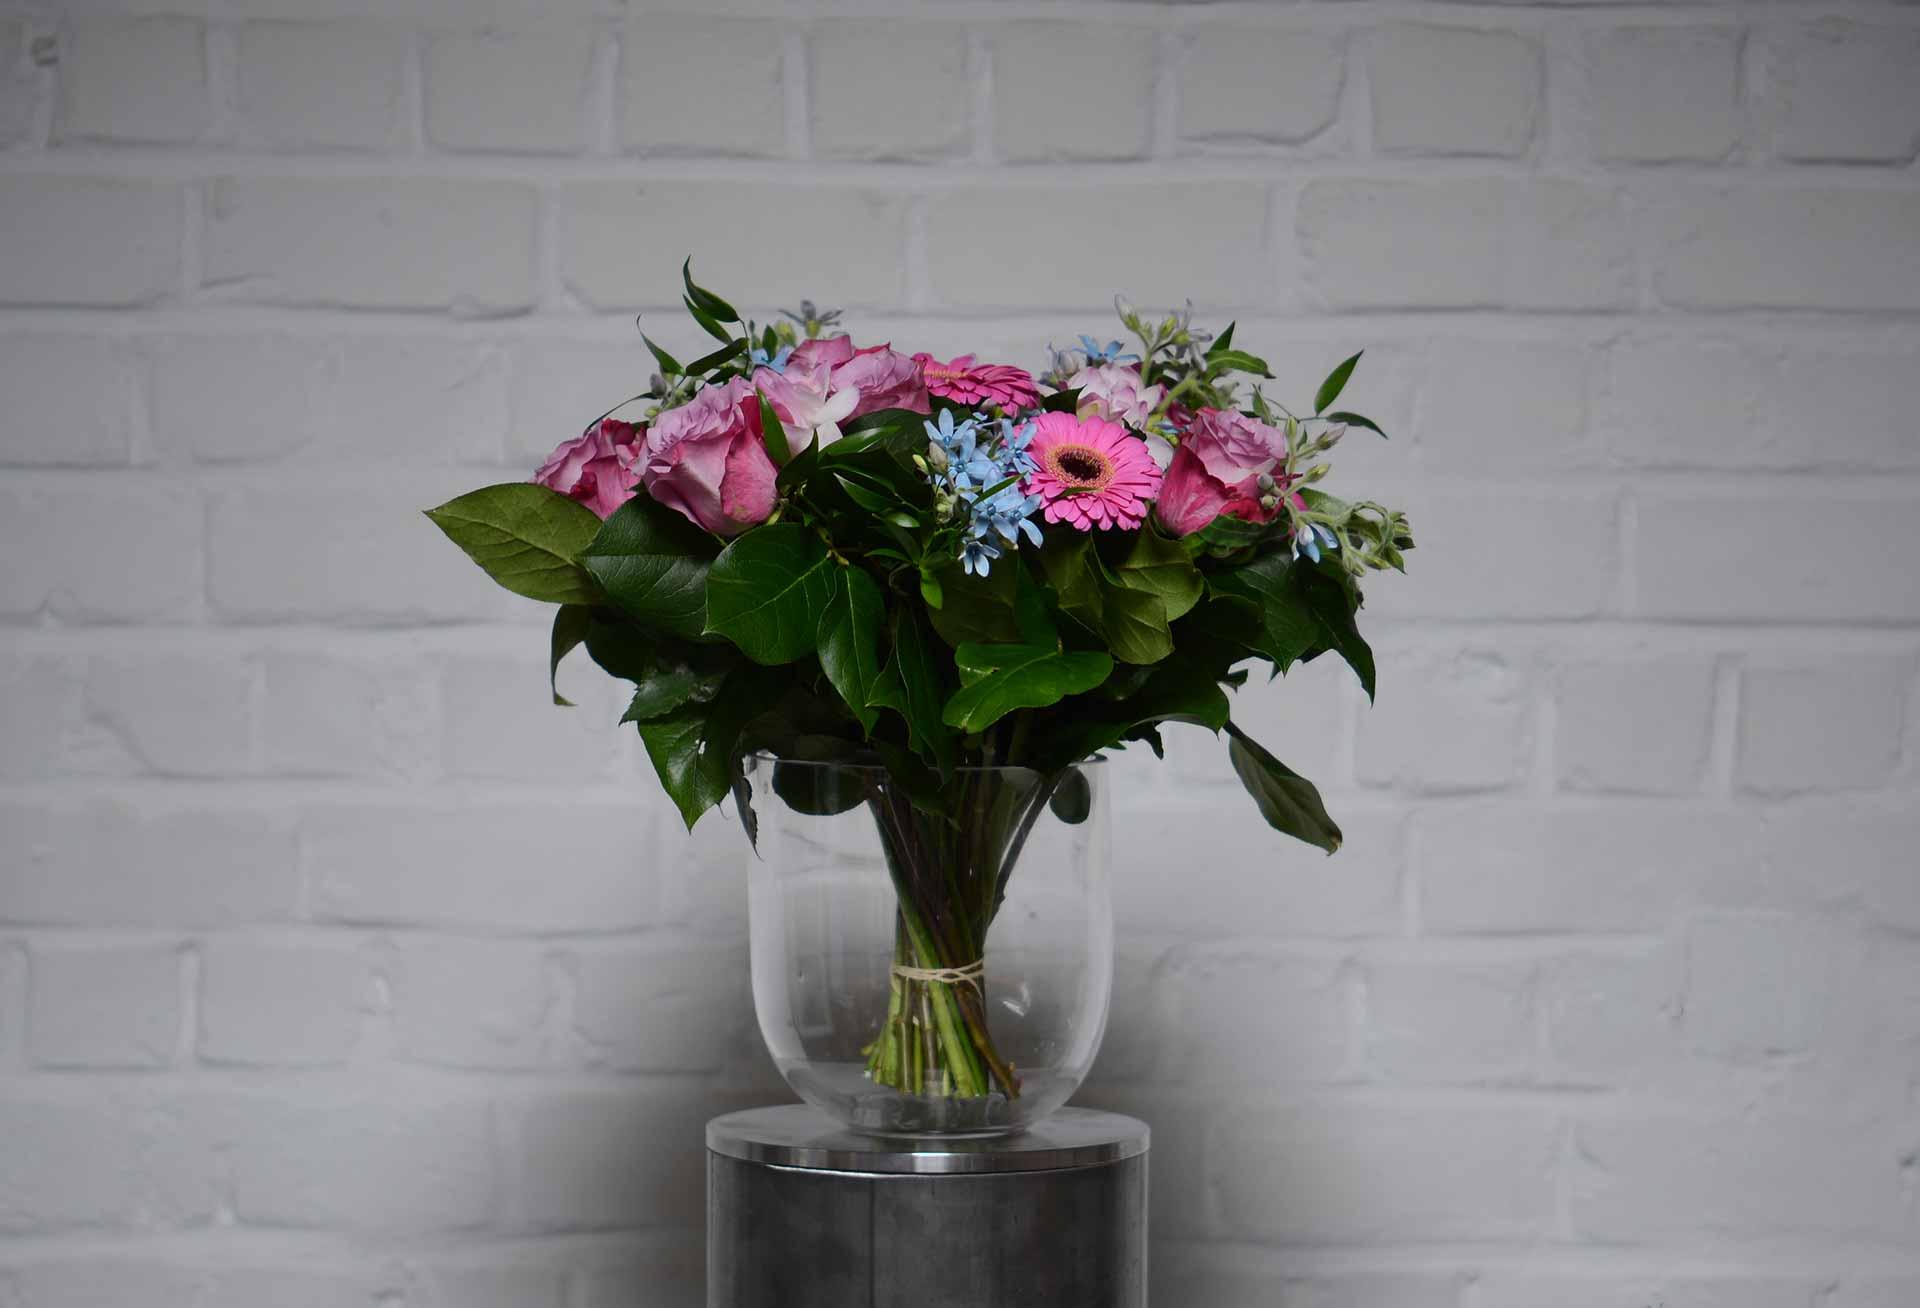 Offrir un bouquet de fleurs - Daily flowers -  - Daily flowers